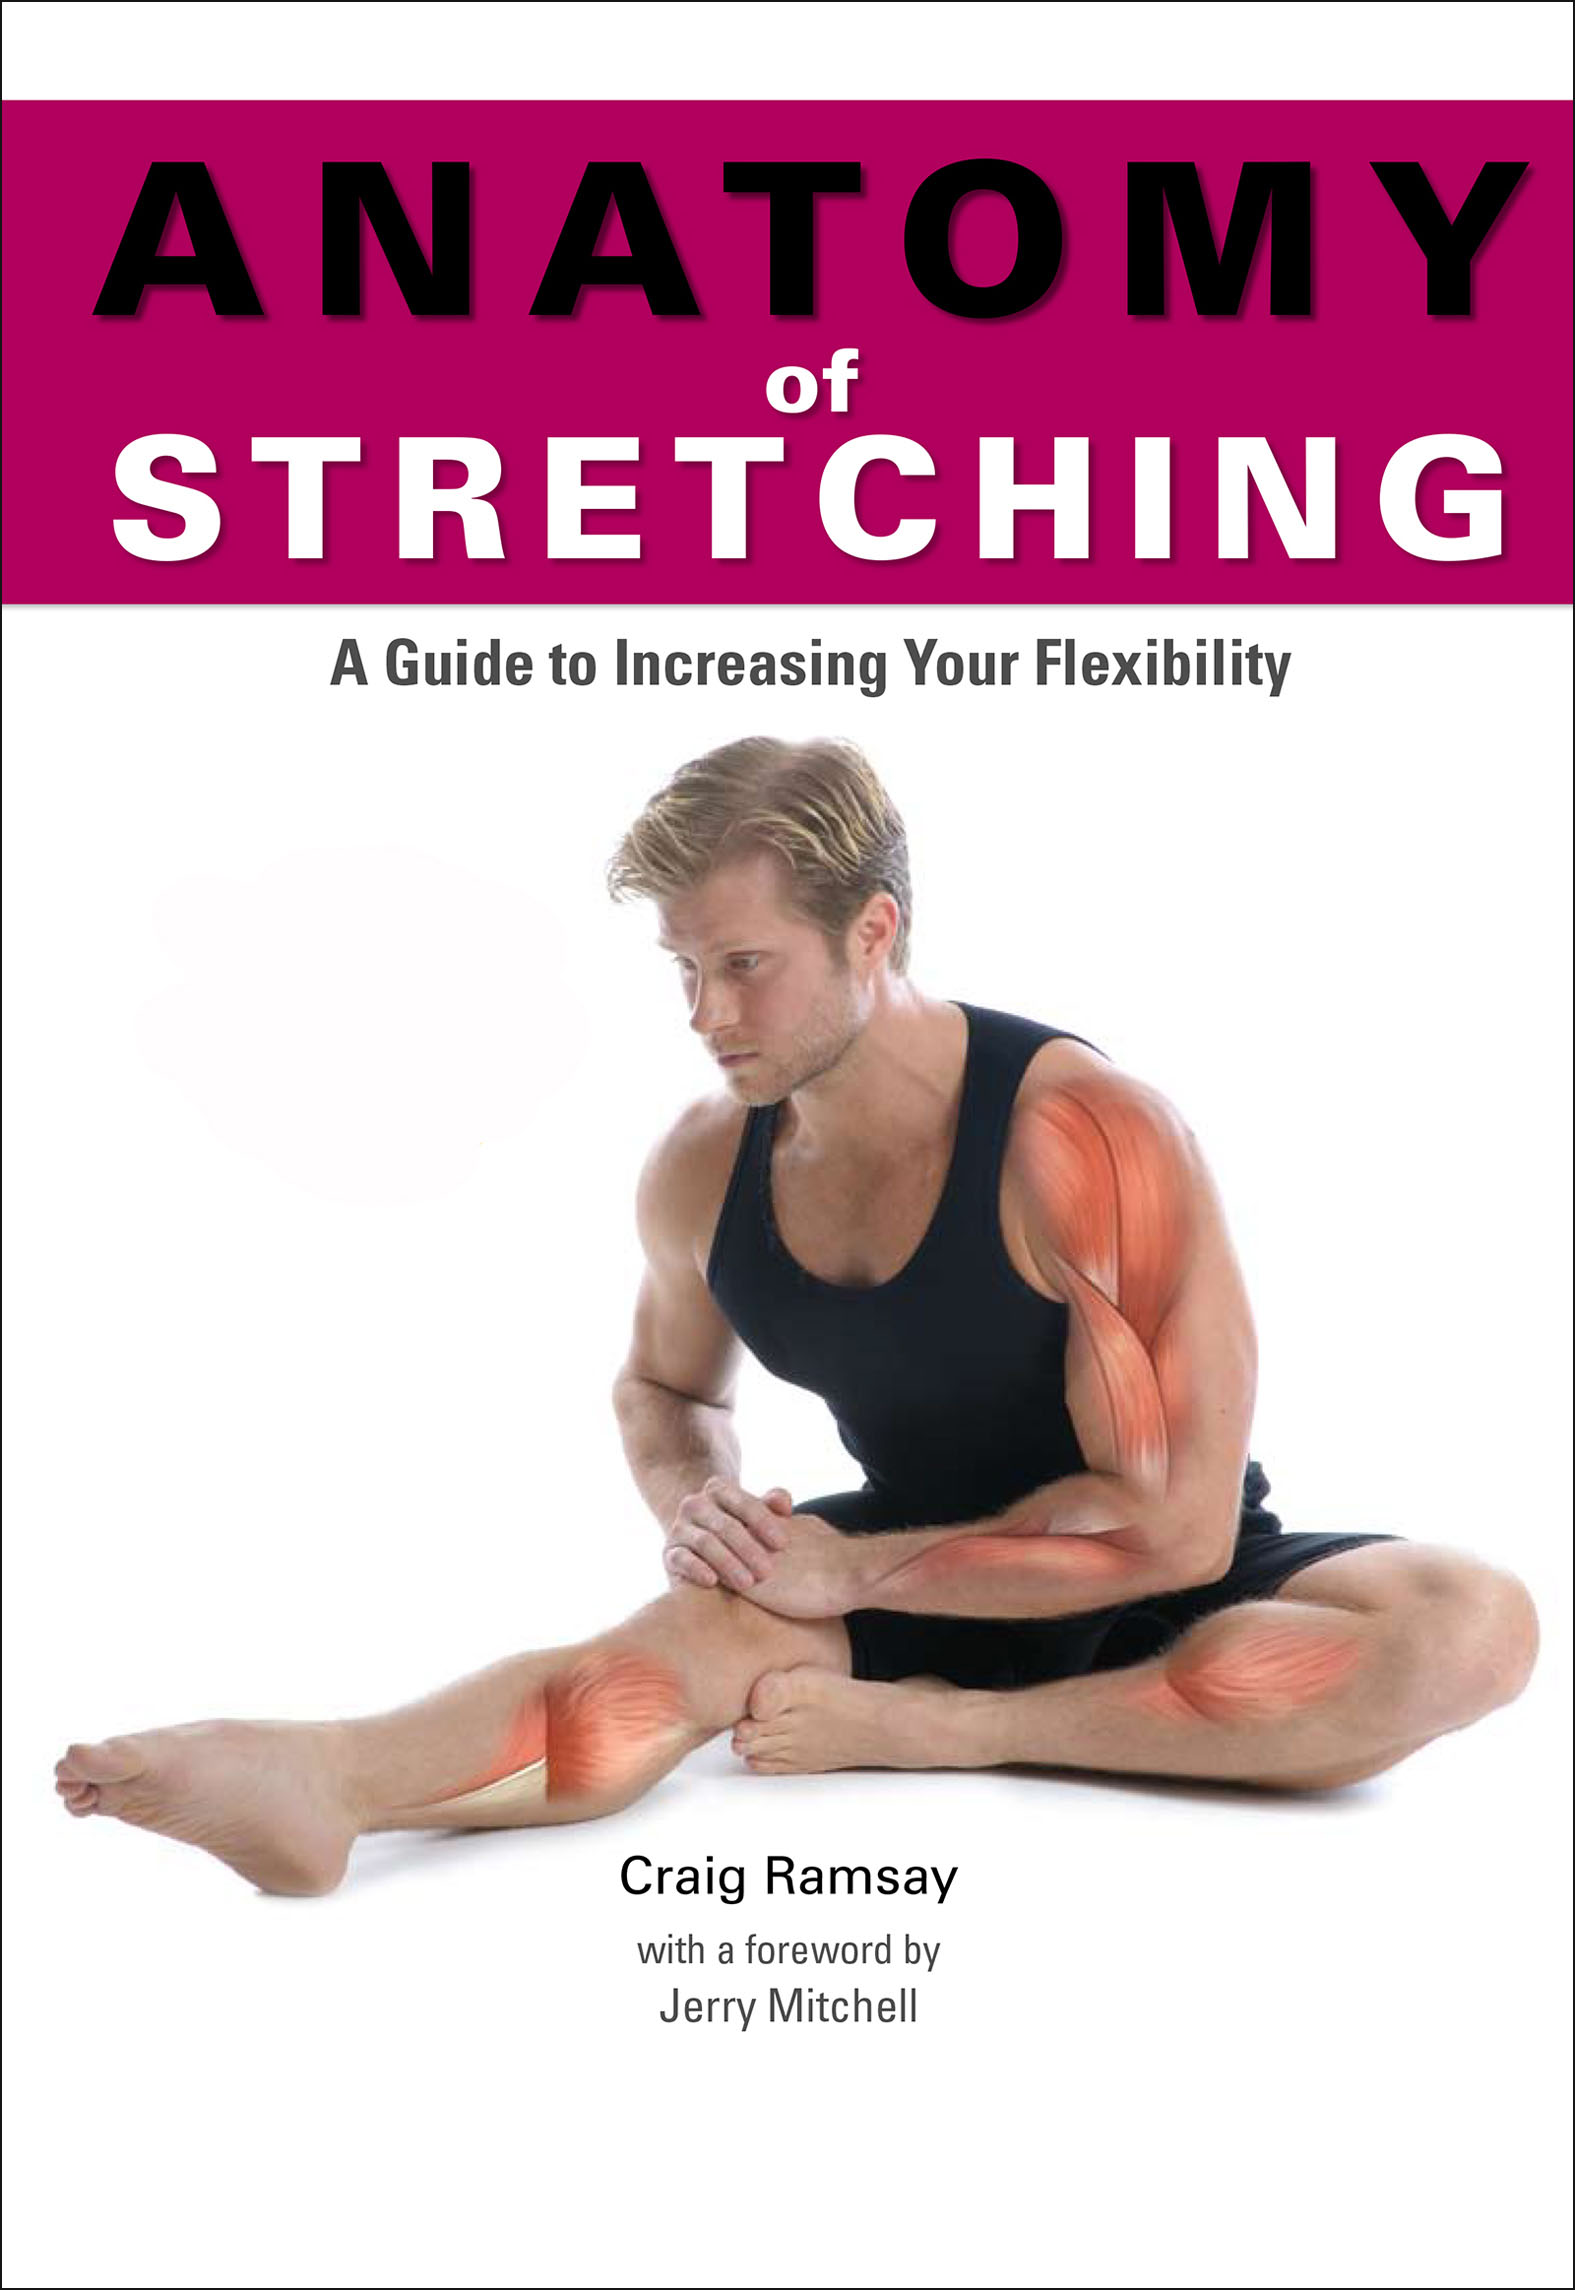 Anatomy of Stretching - 10-14.99